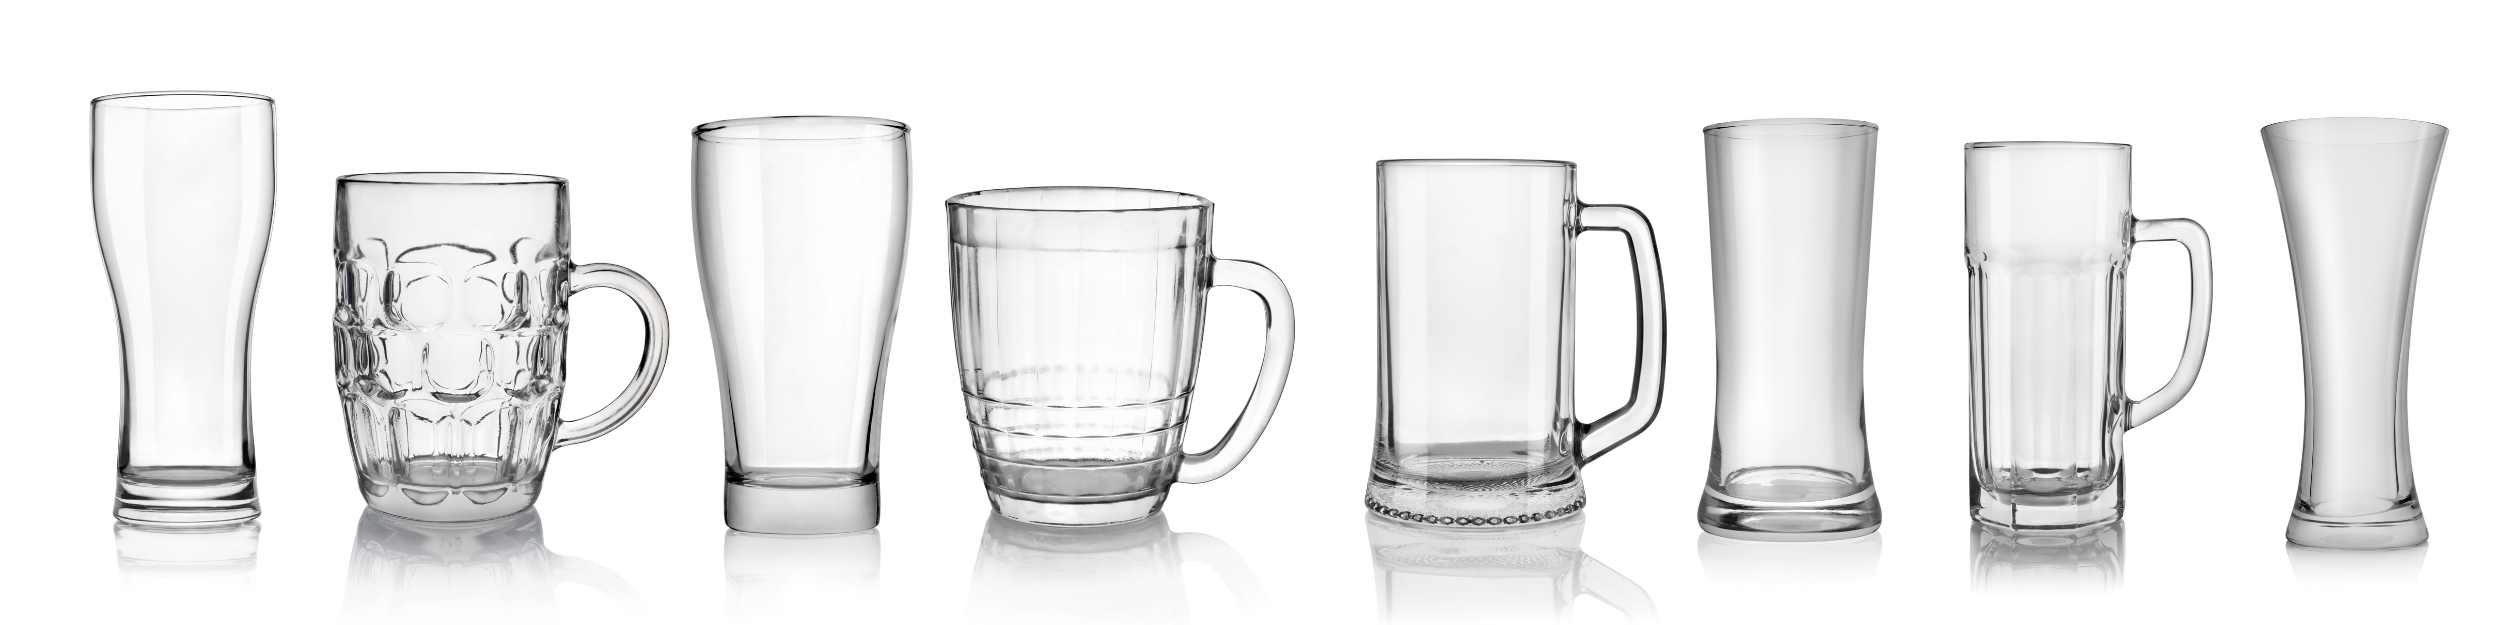 Gamme de différents types de verres